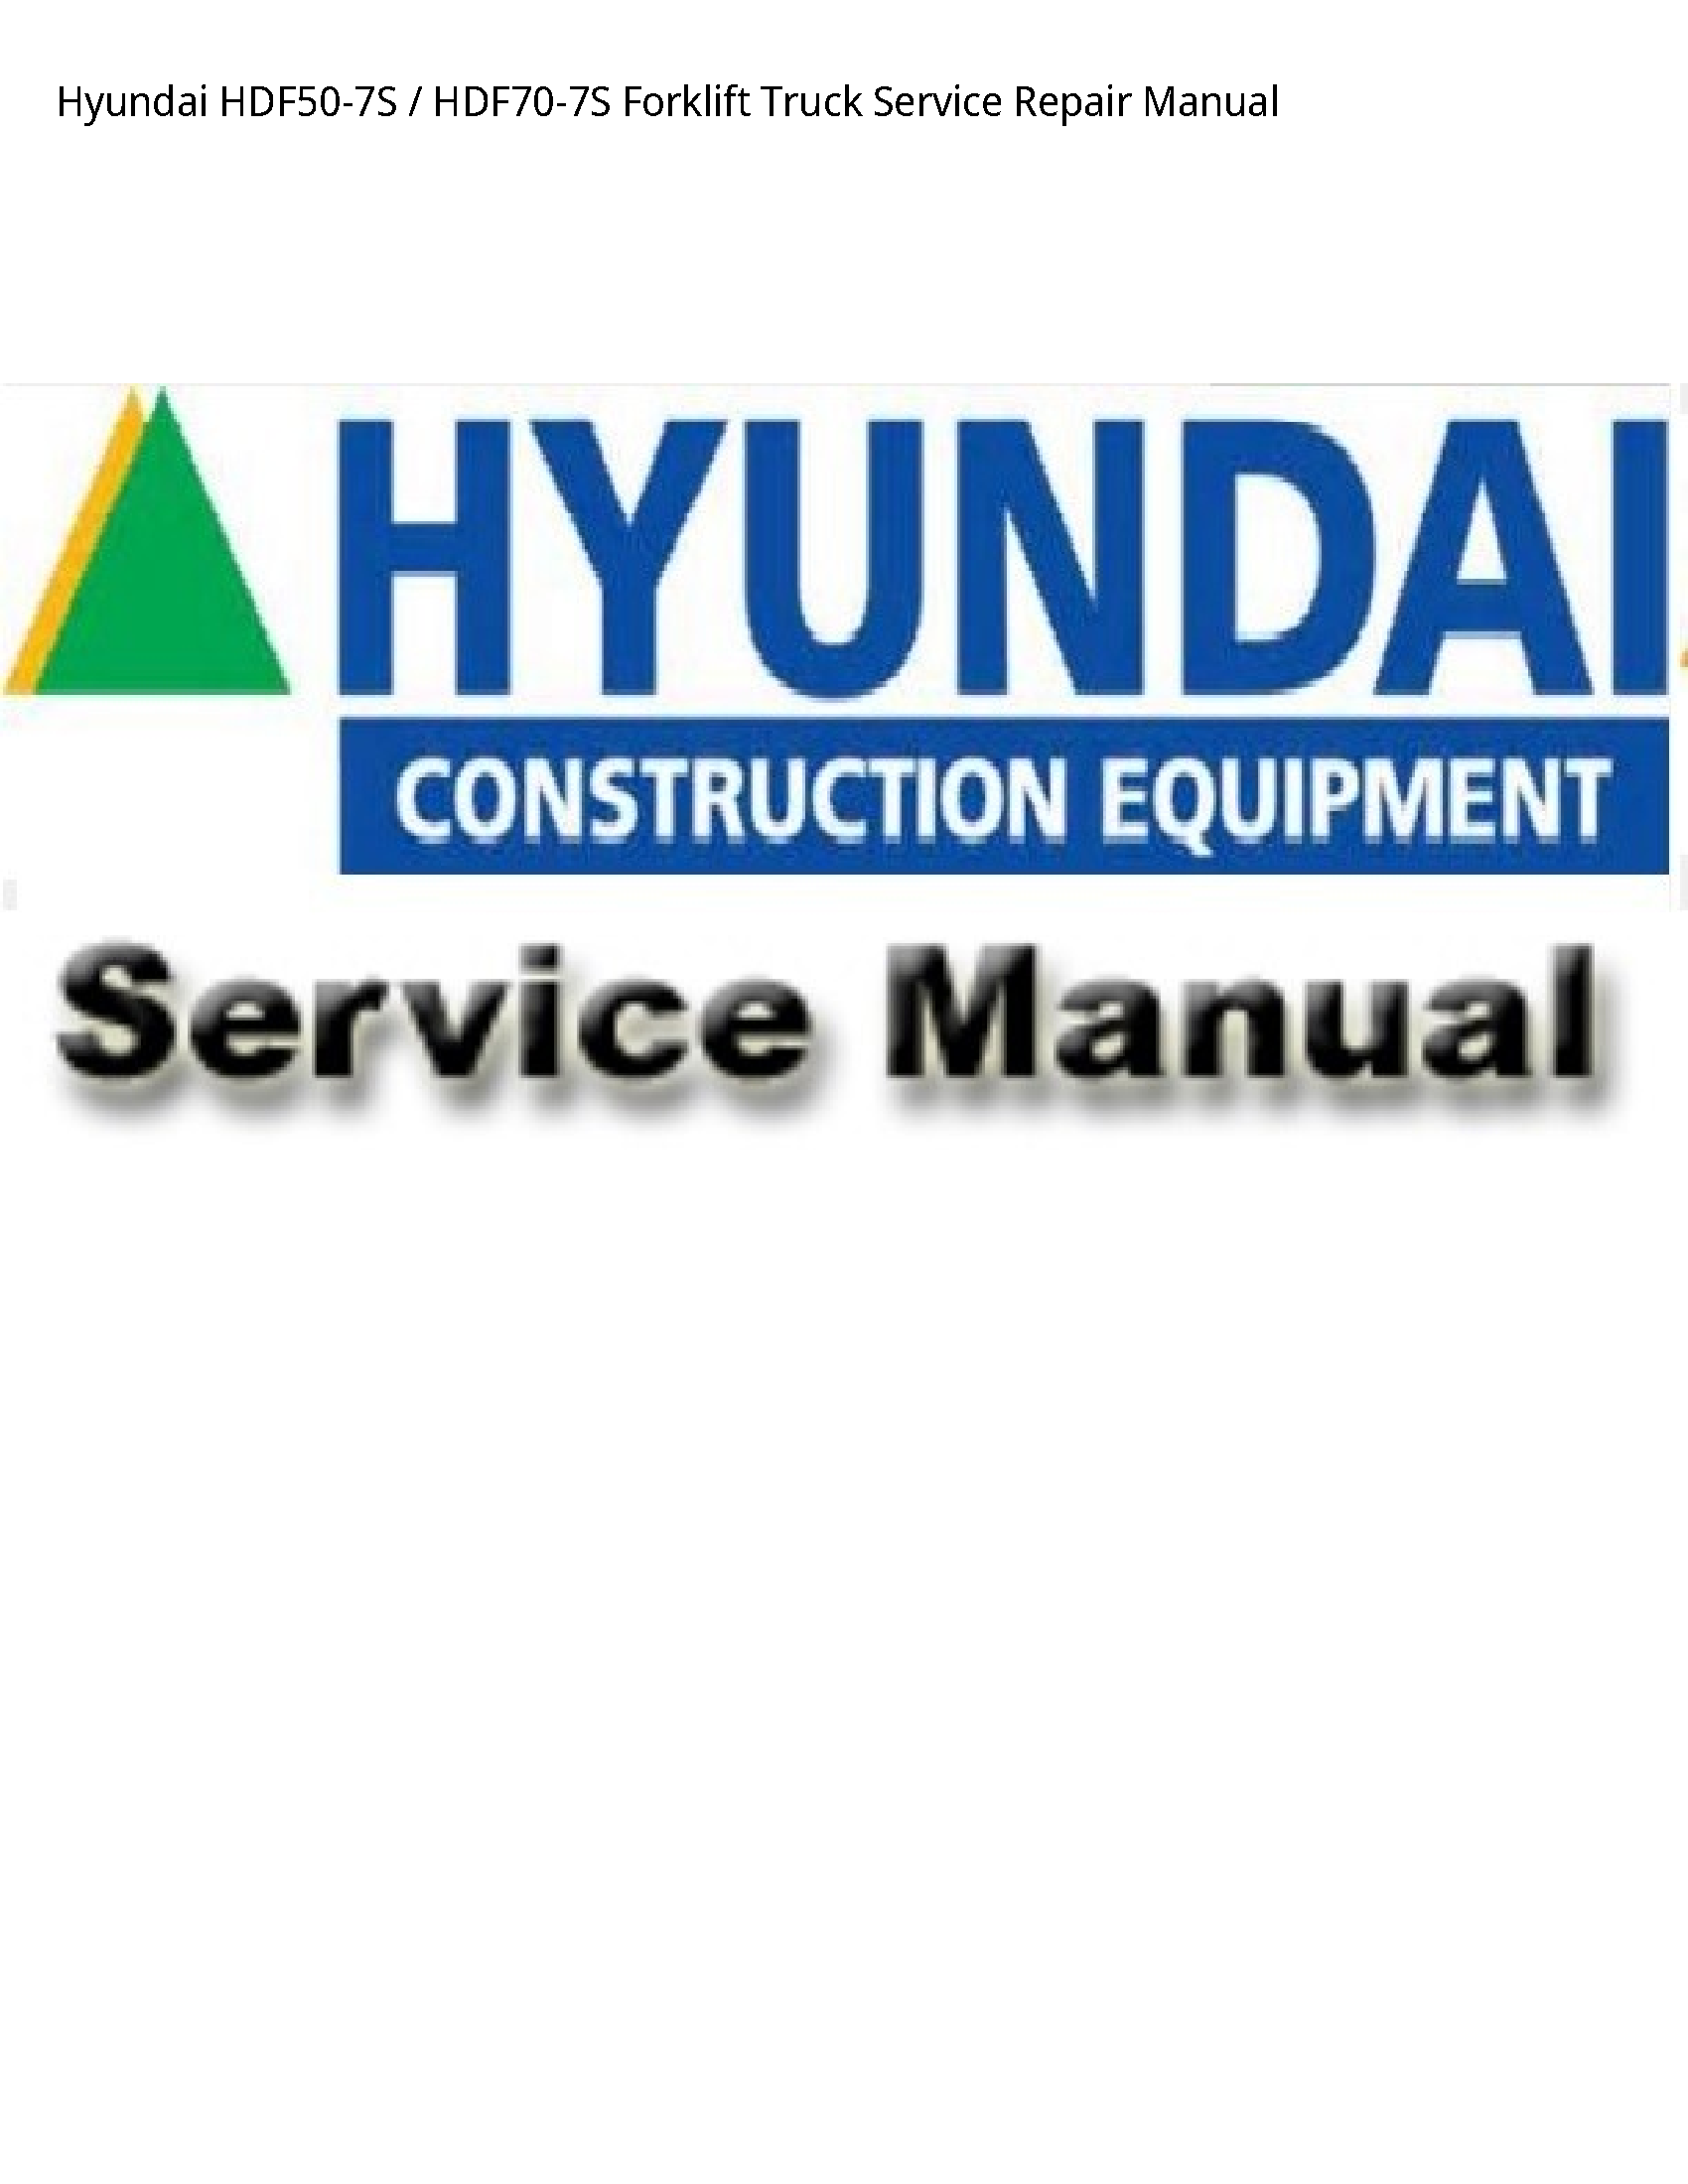 Hyundai HDF50-7S Forklift Truck manual